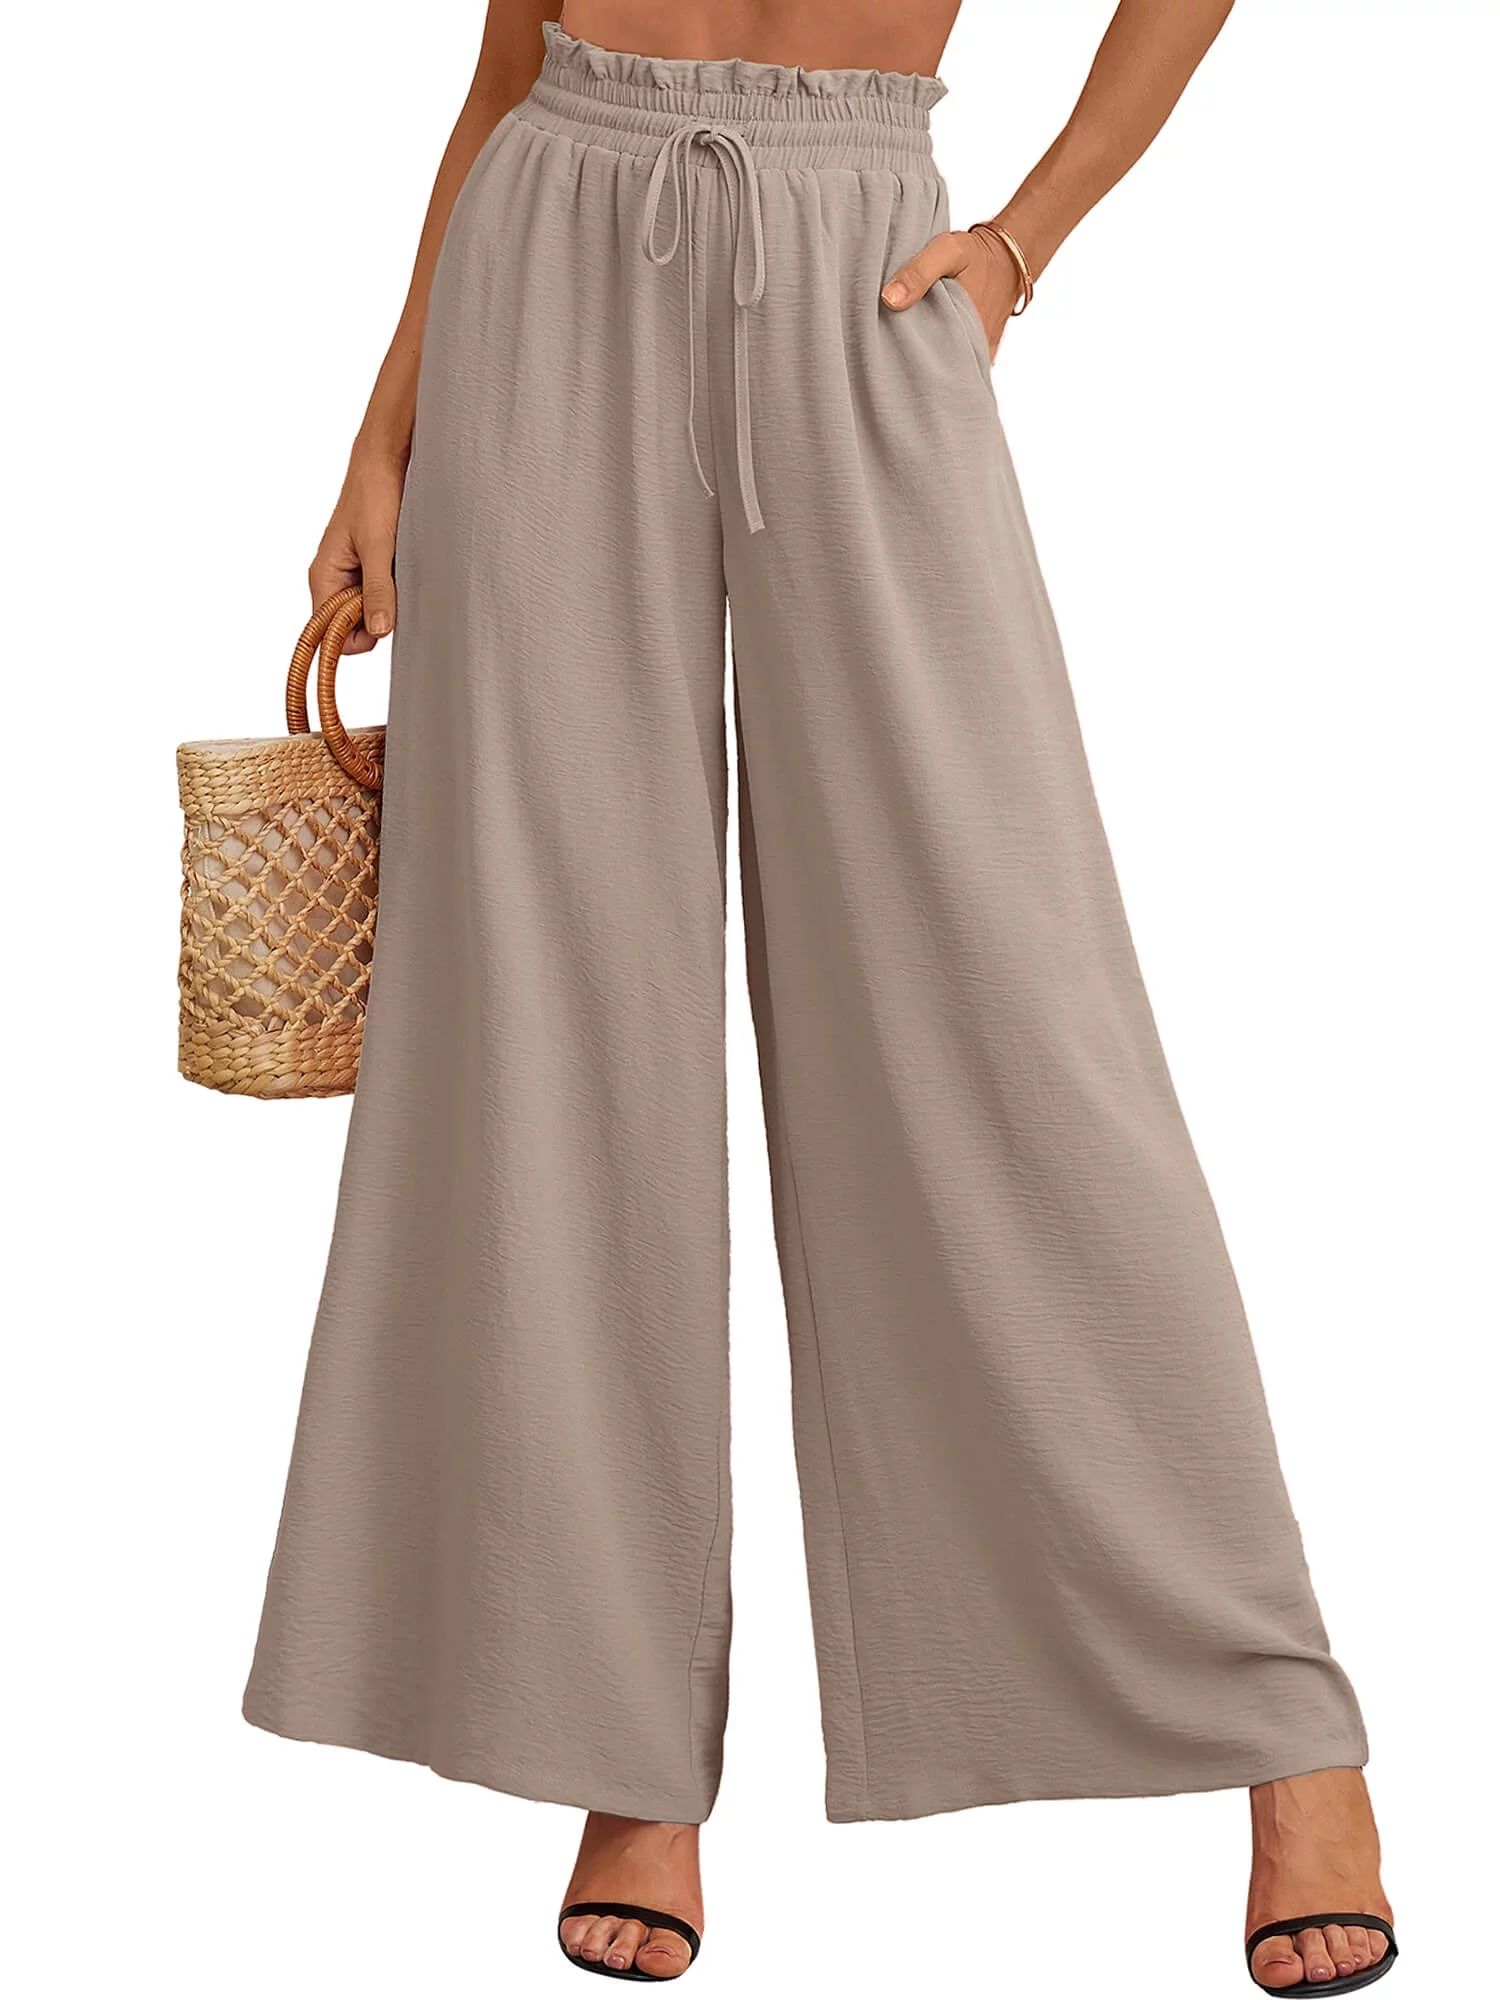 SHOWMALL Women's Pants Casual Elastic Waist Wide Leg Pants Wheat S Palazzo Pants with Pockets - W... | Walmart (US)